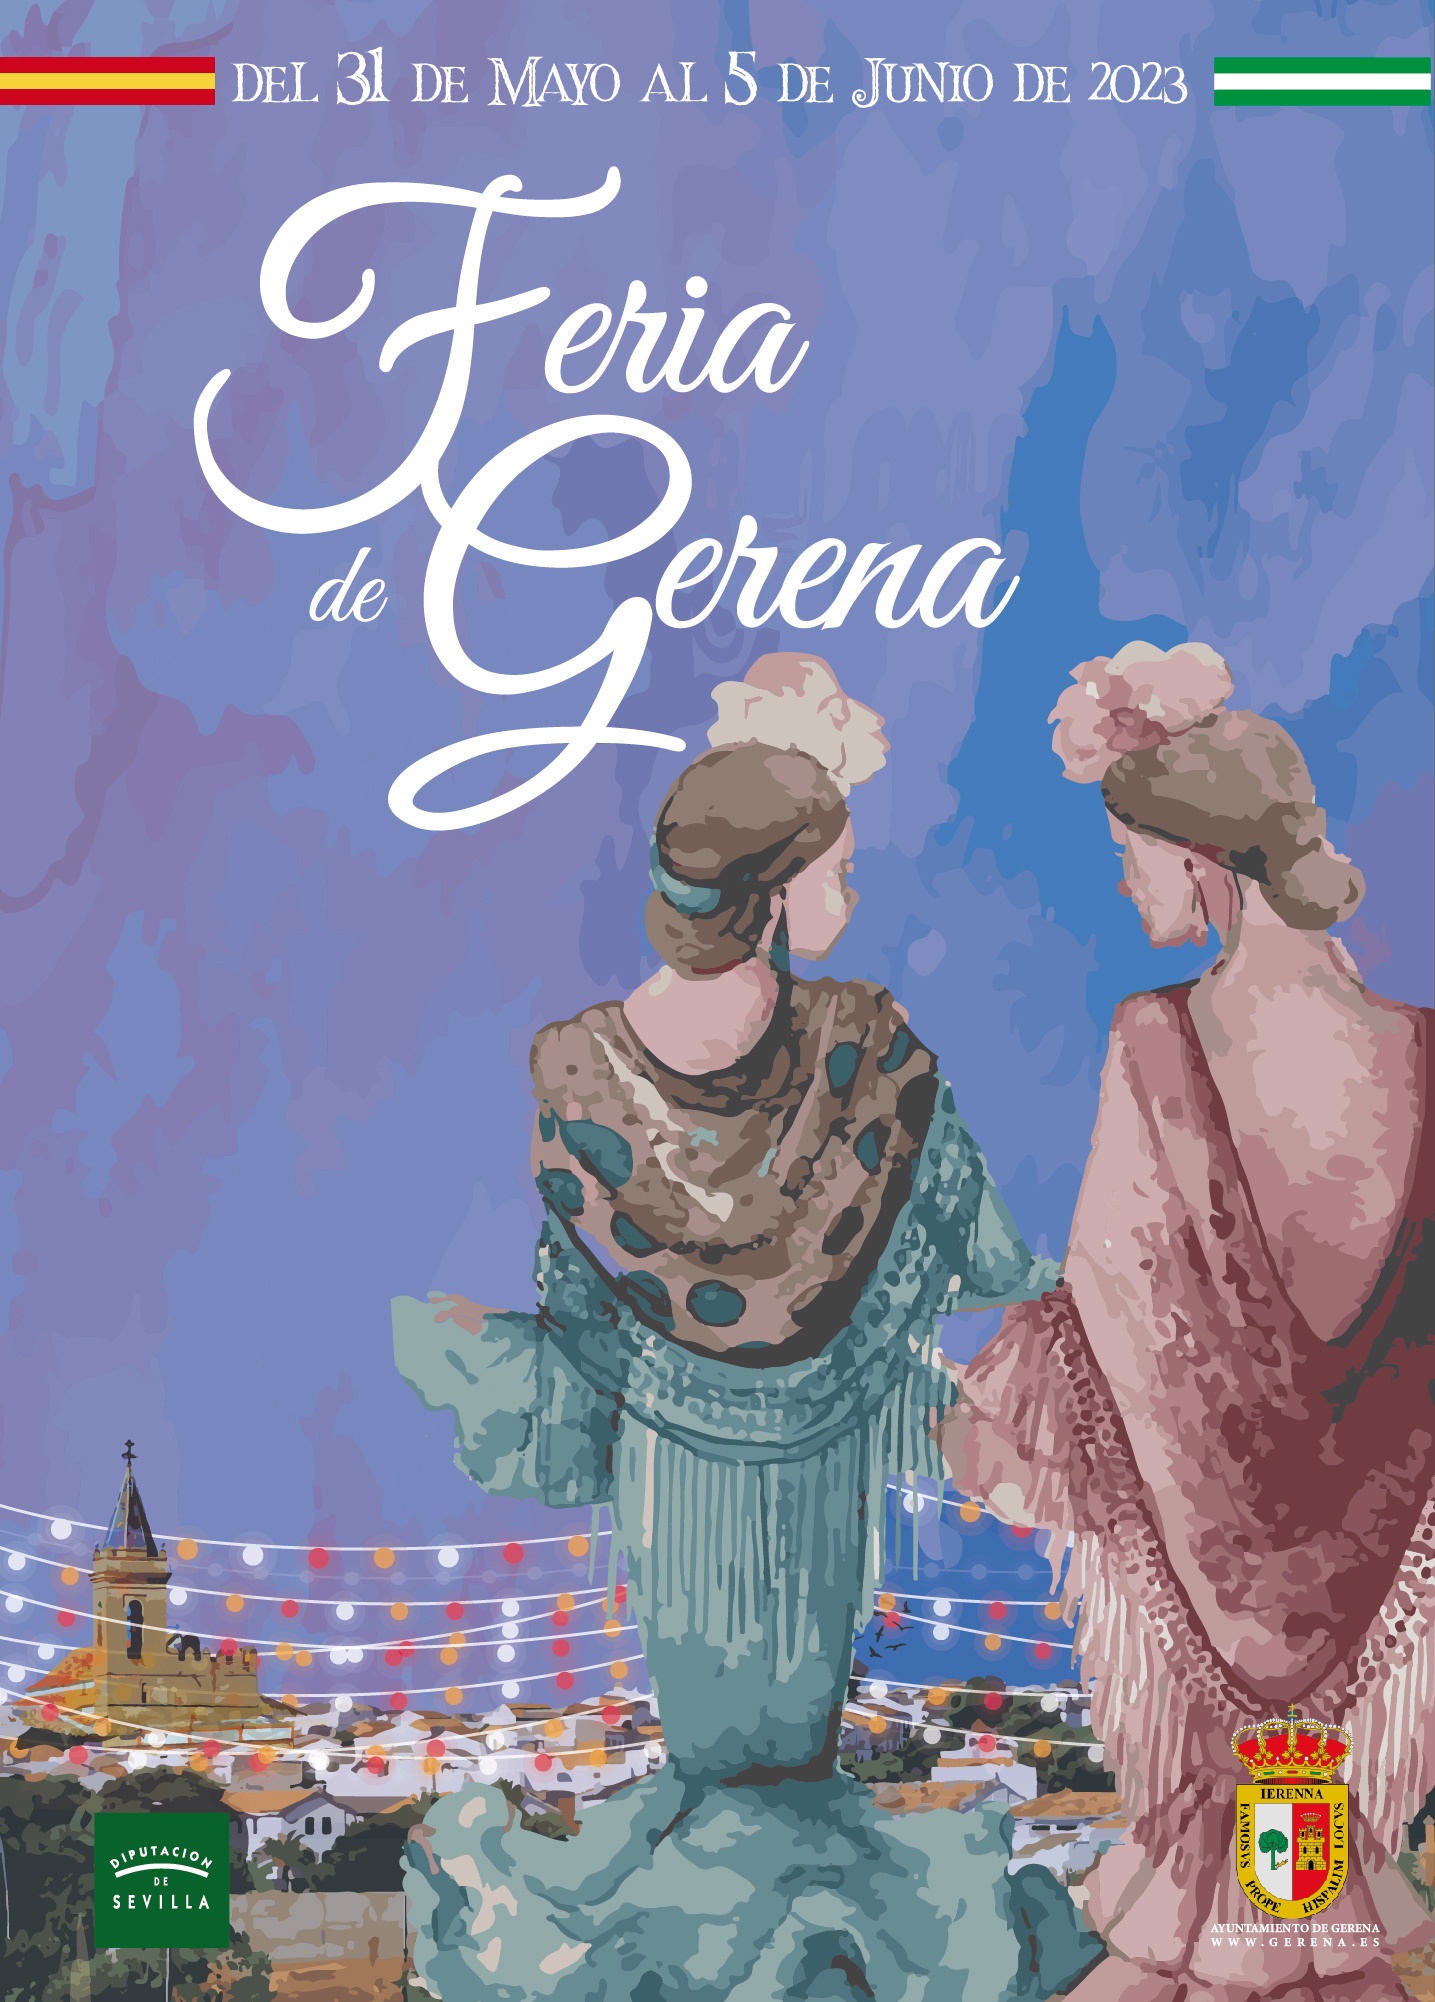 Cartel de Feria de Gerena 2023